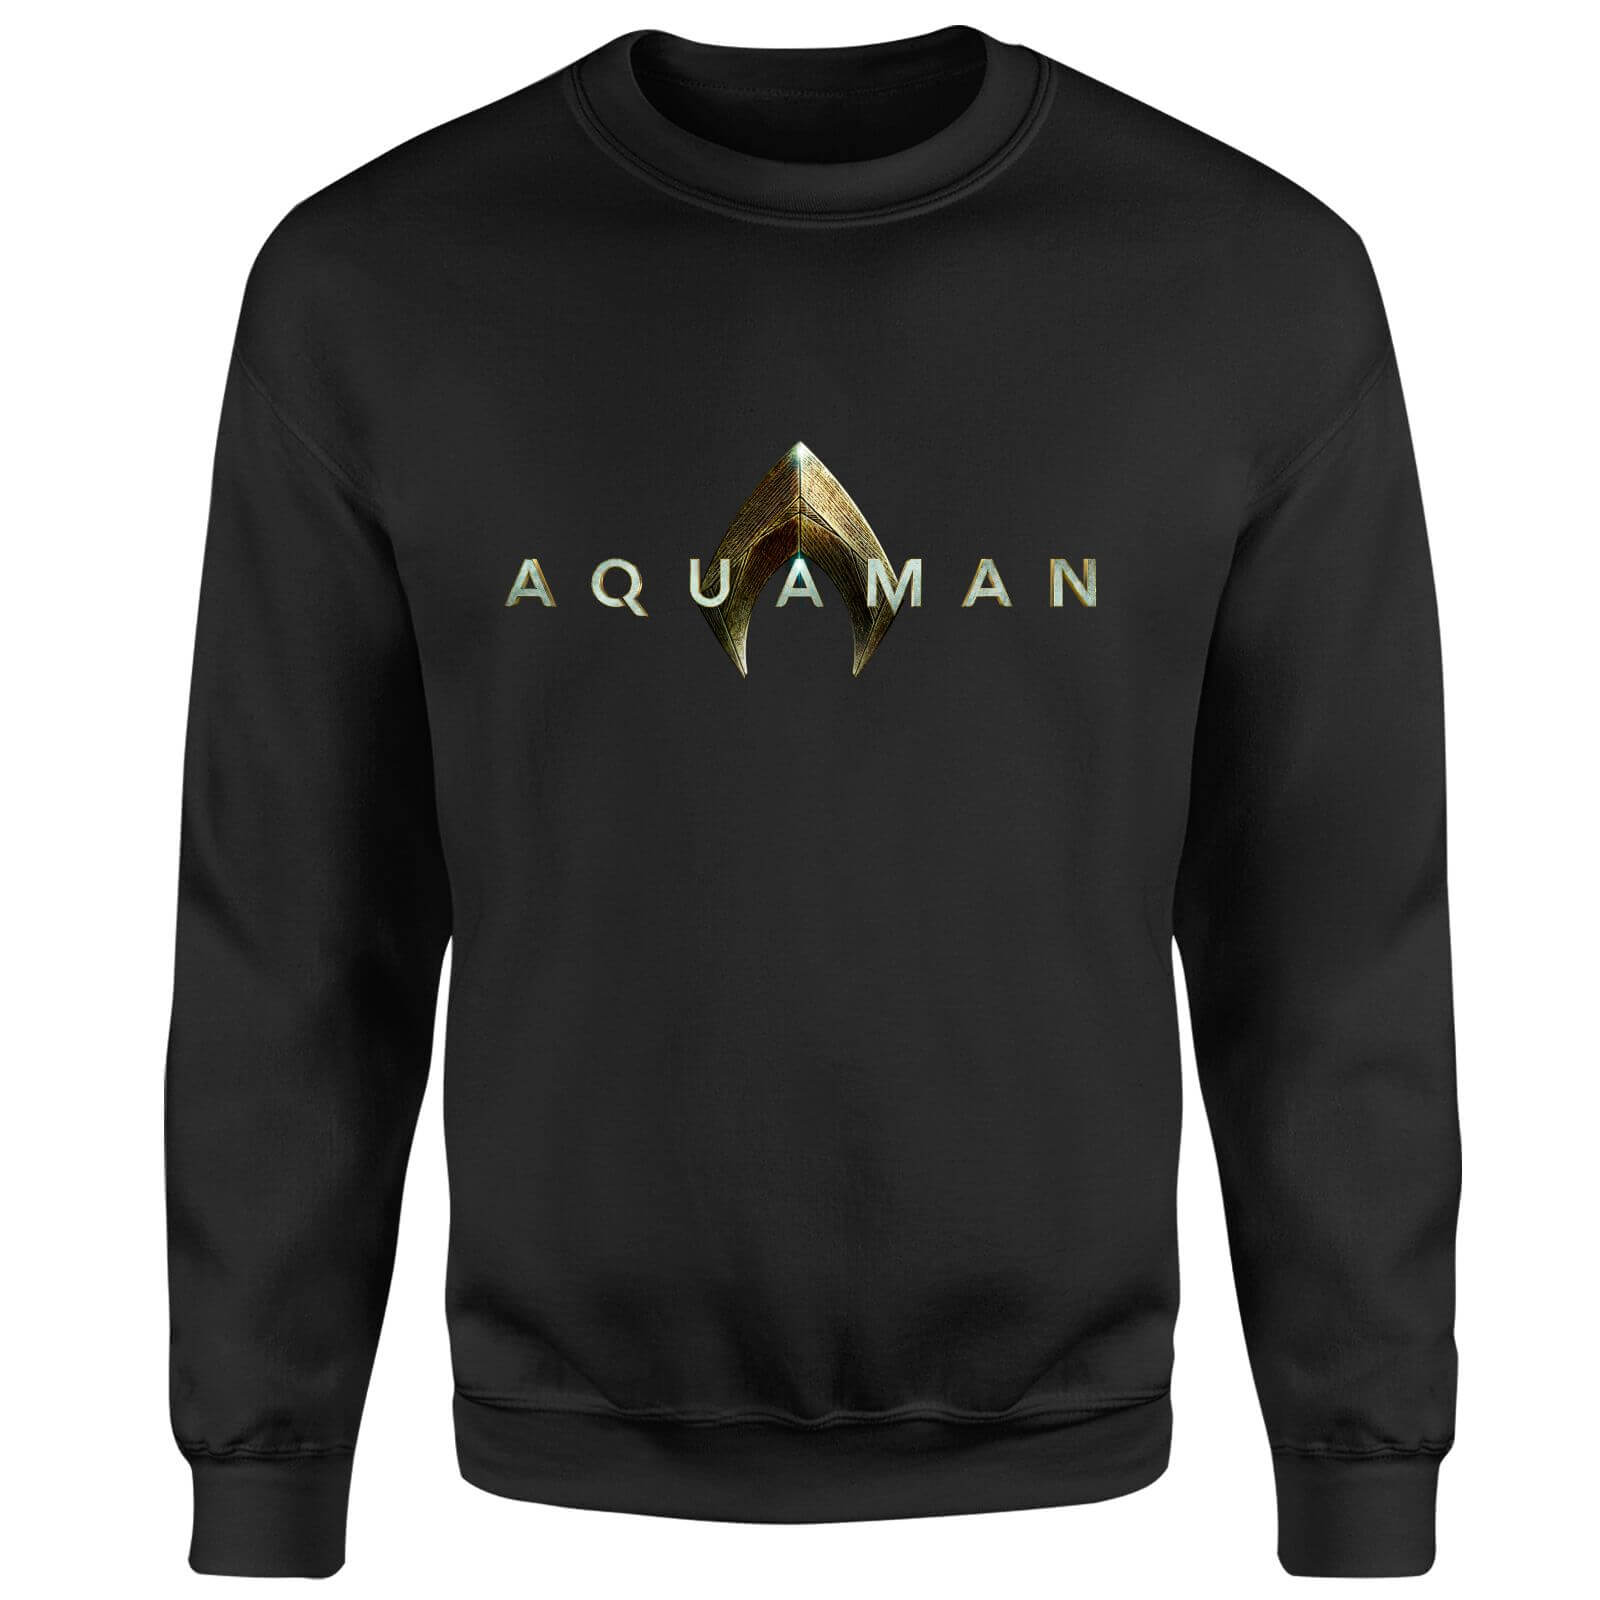 Aquaman Title Sweatshirt - Schwarz - XXL - Schwarz 4